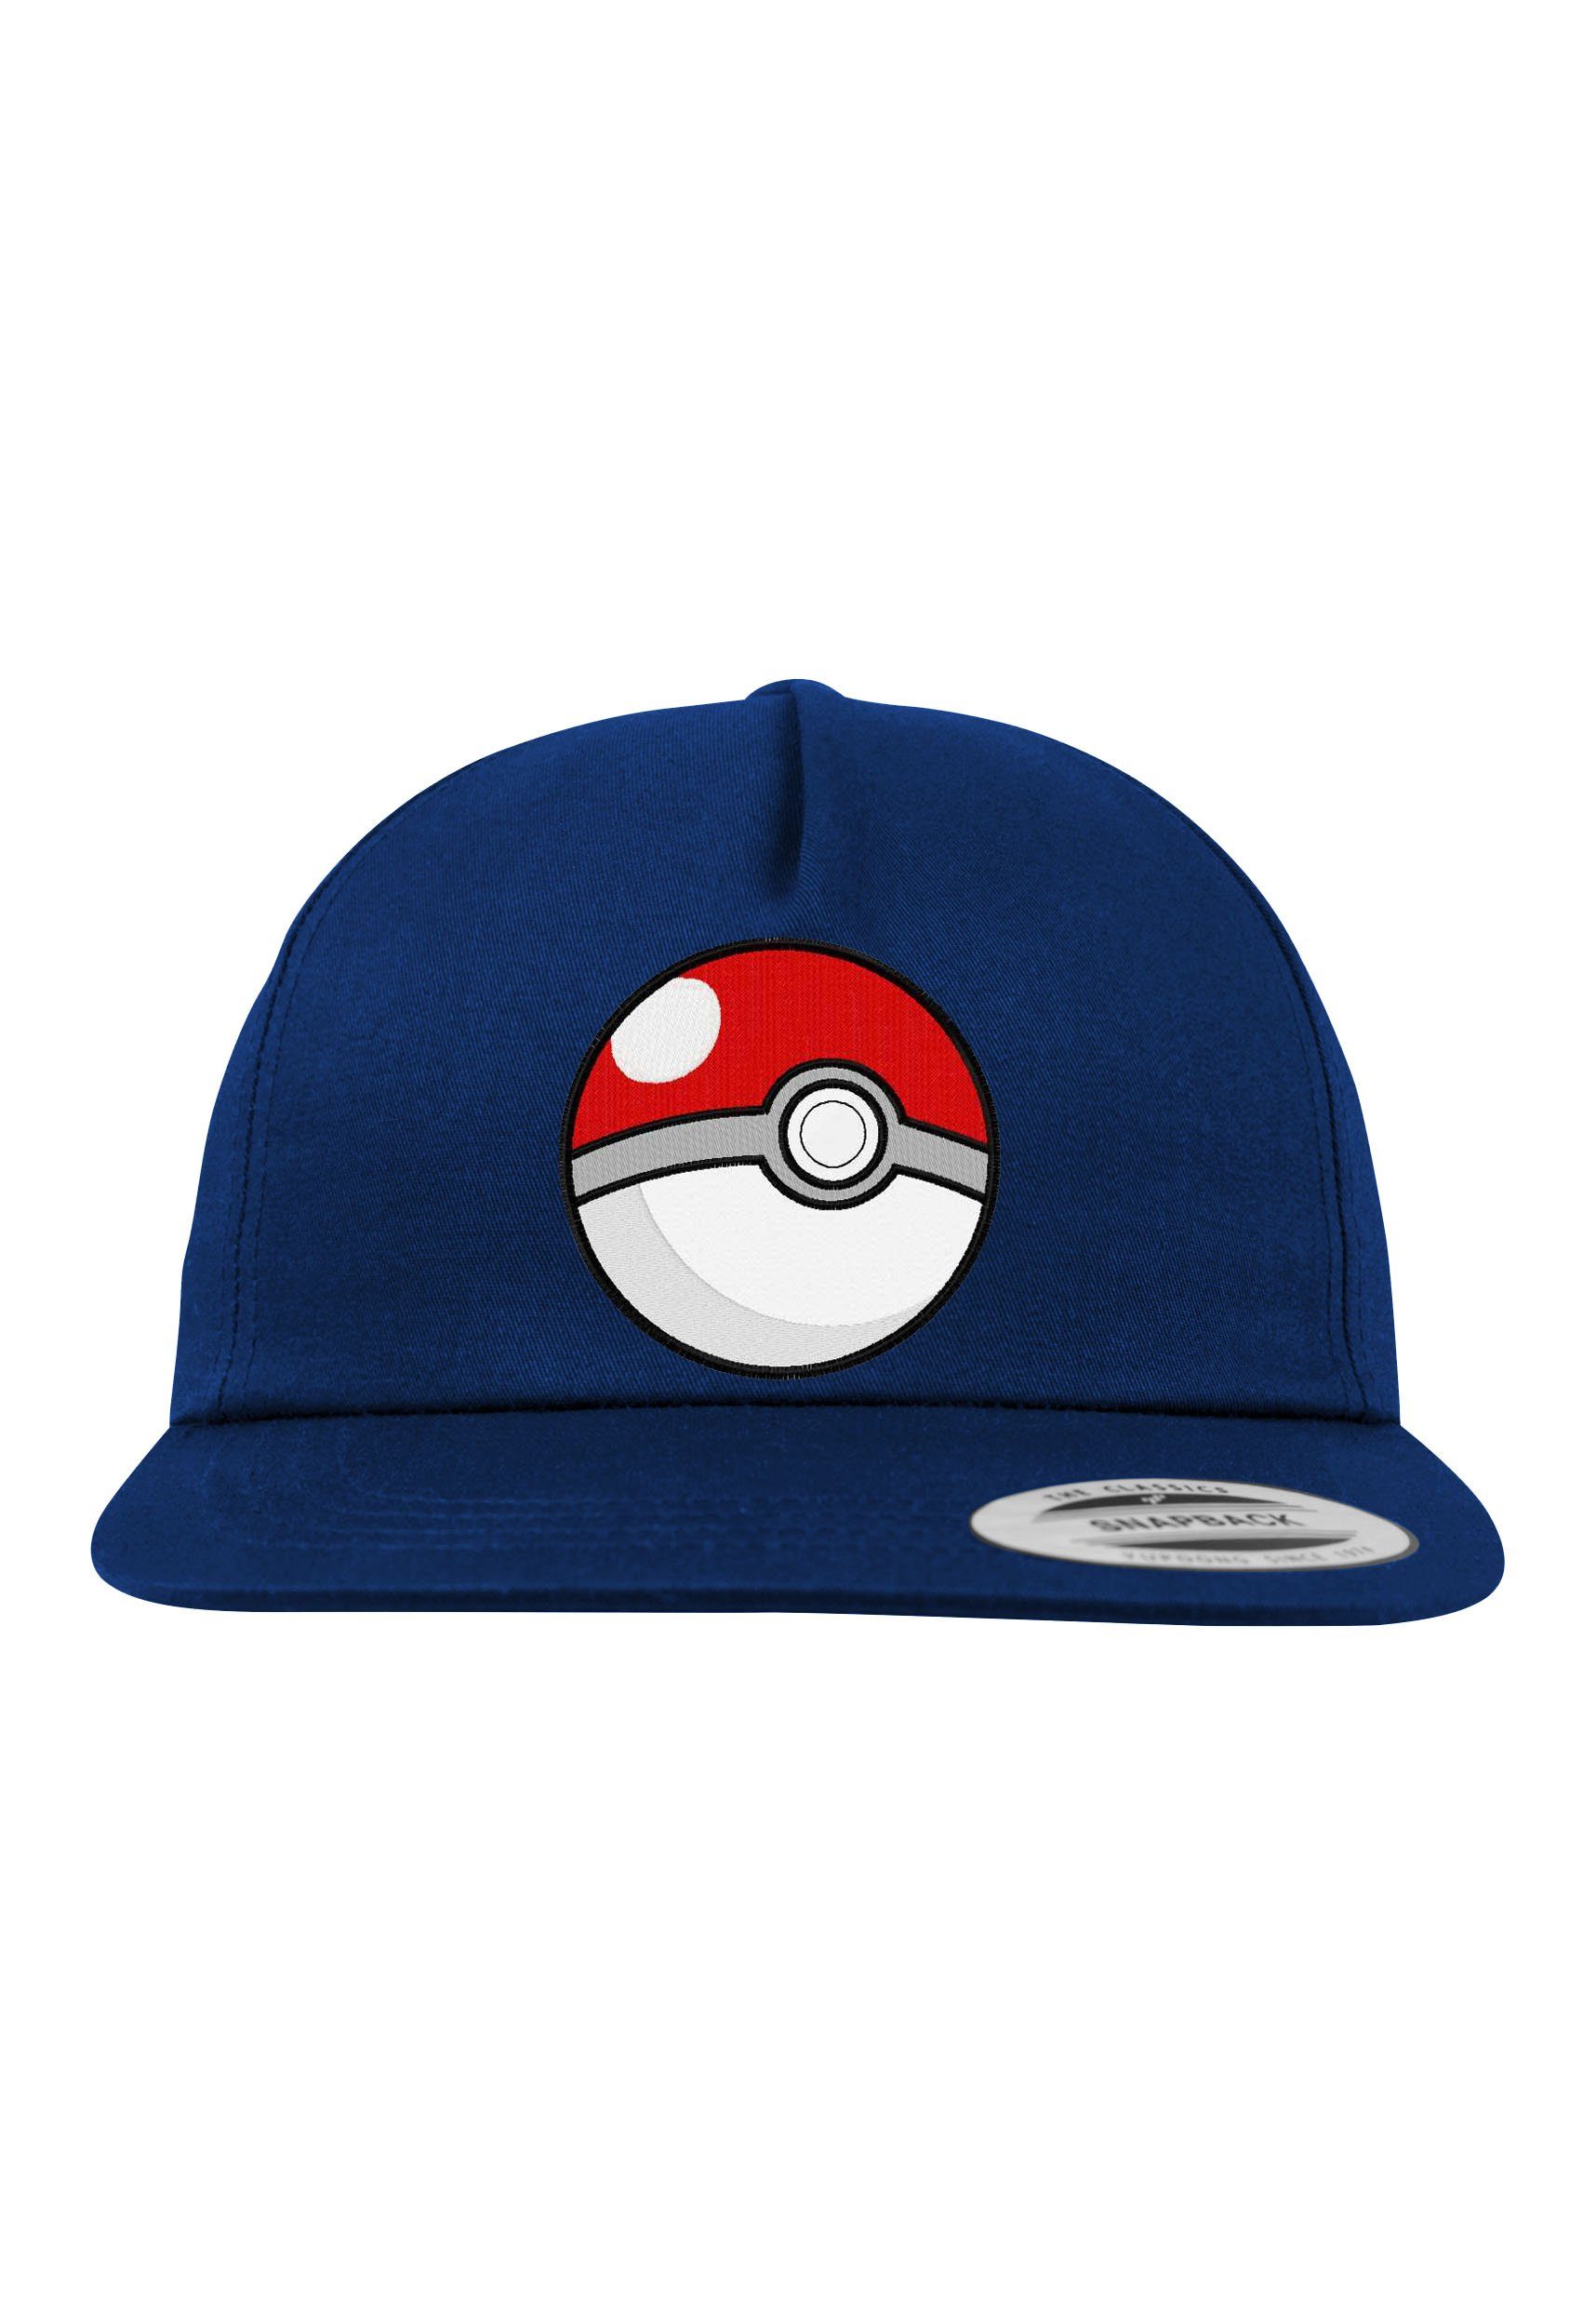 Youth Designz Baseball Cap Poke Ball Unisex Snapback Cap mit modischer Logo Stickerei Navyblau